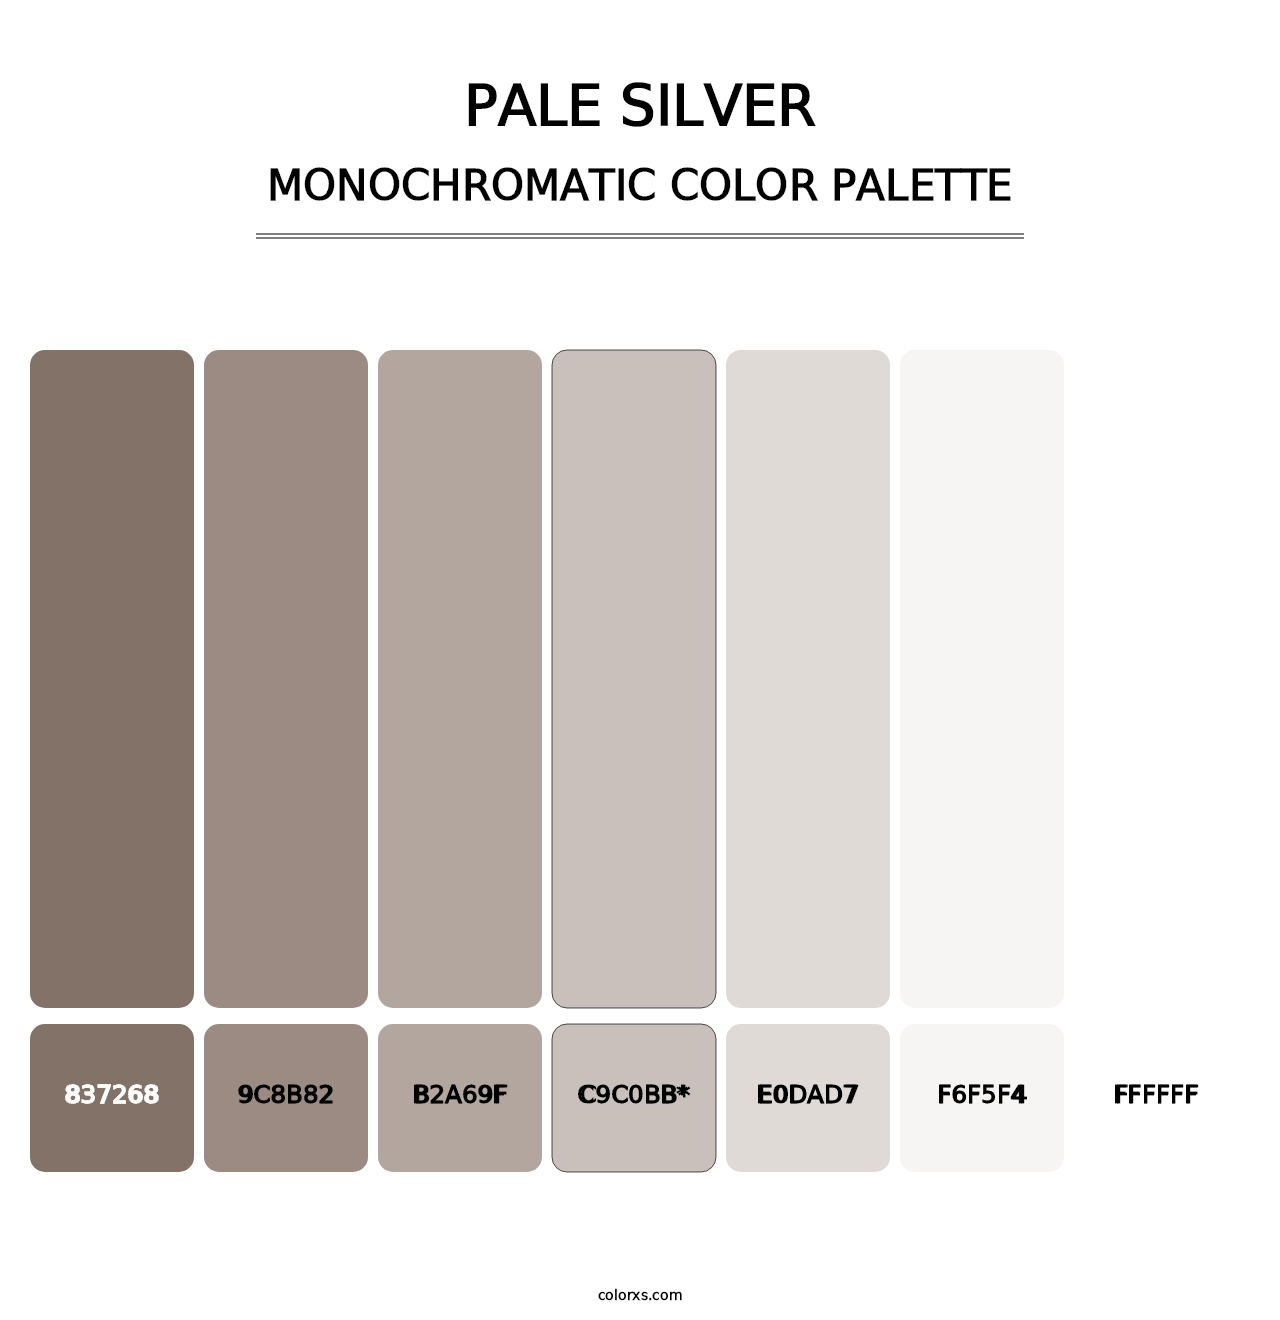 Pale Silver - Monochromatic Color Palette